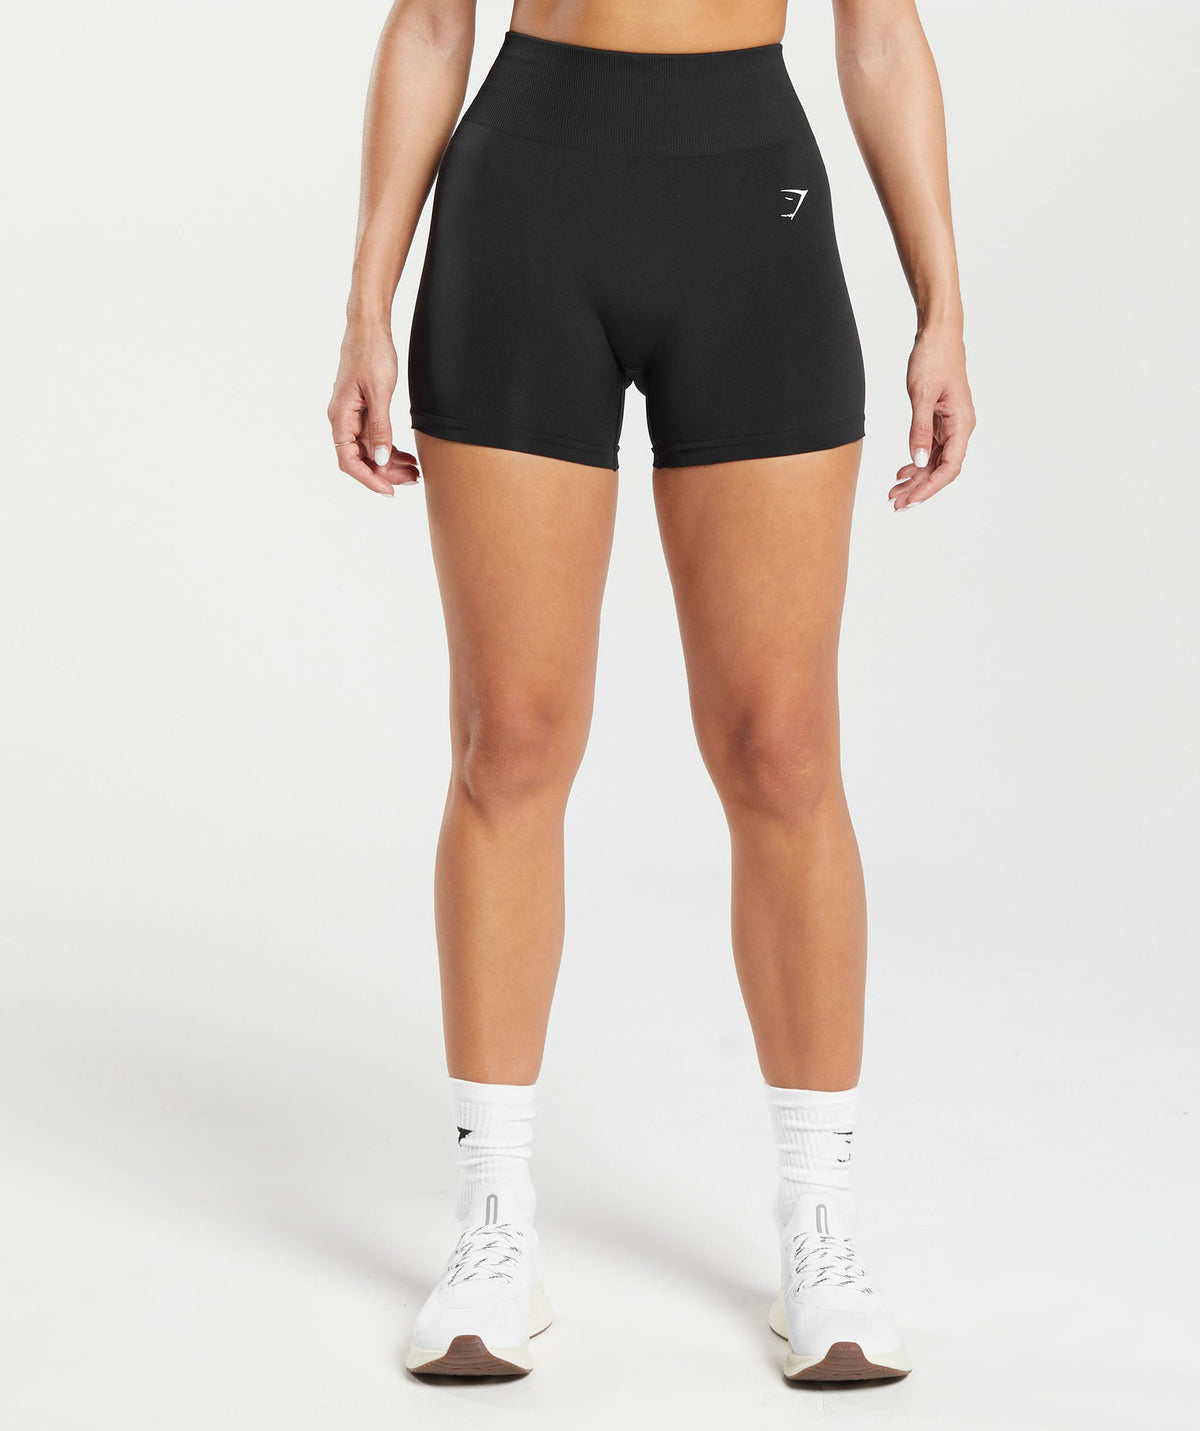 Women's Gym Shorts - 70% Off* - Black Friday at Gymshark